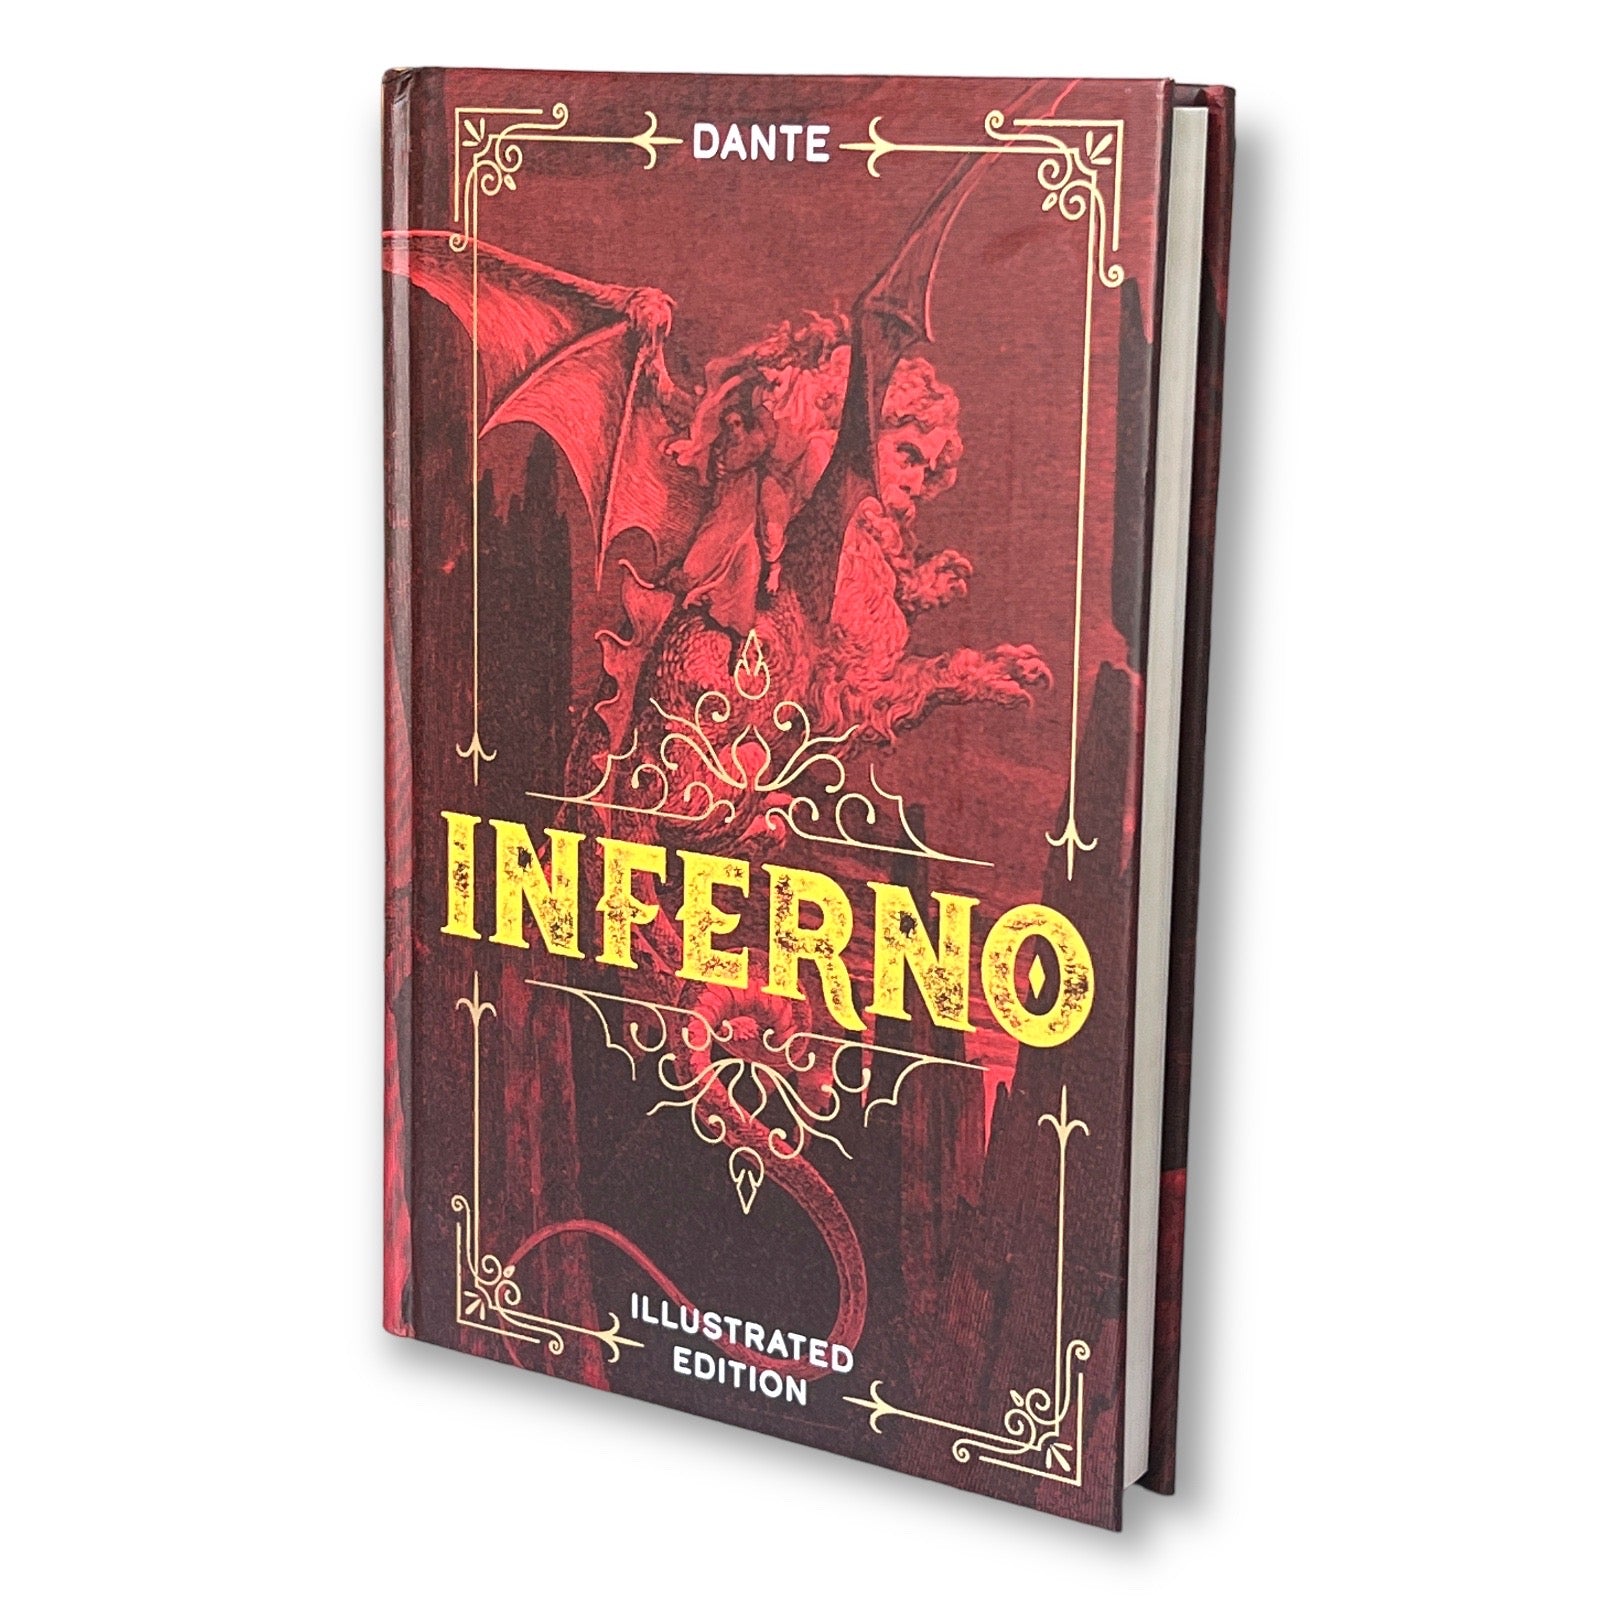 The Divine Comedy: Volume 1: Inferno (Paperback)